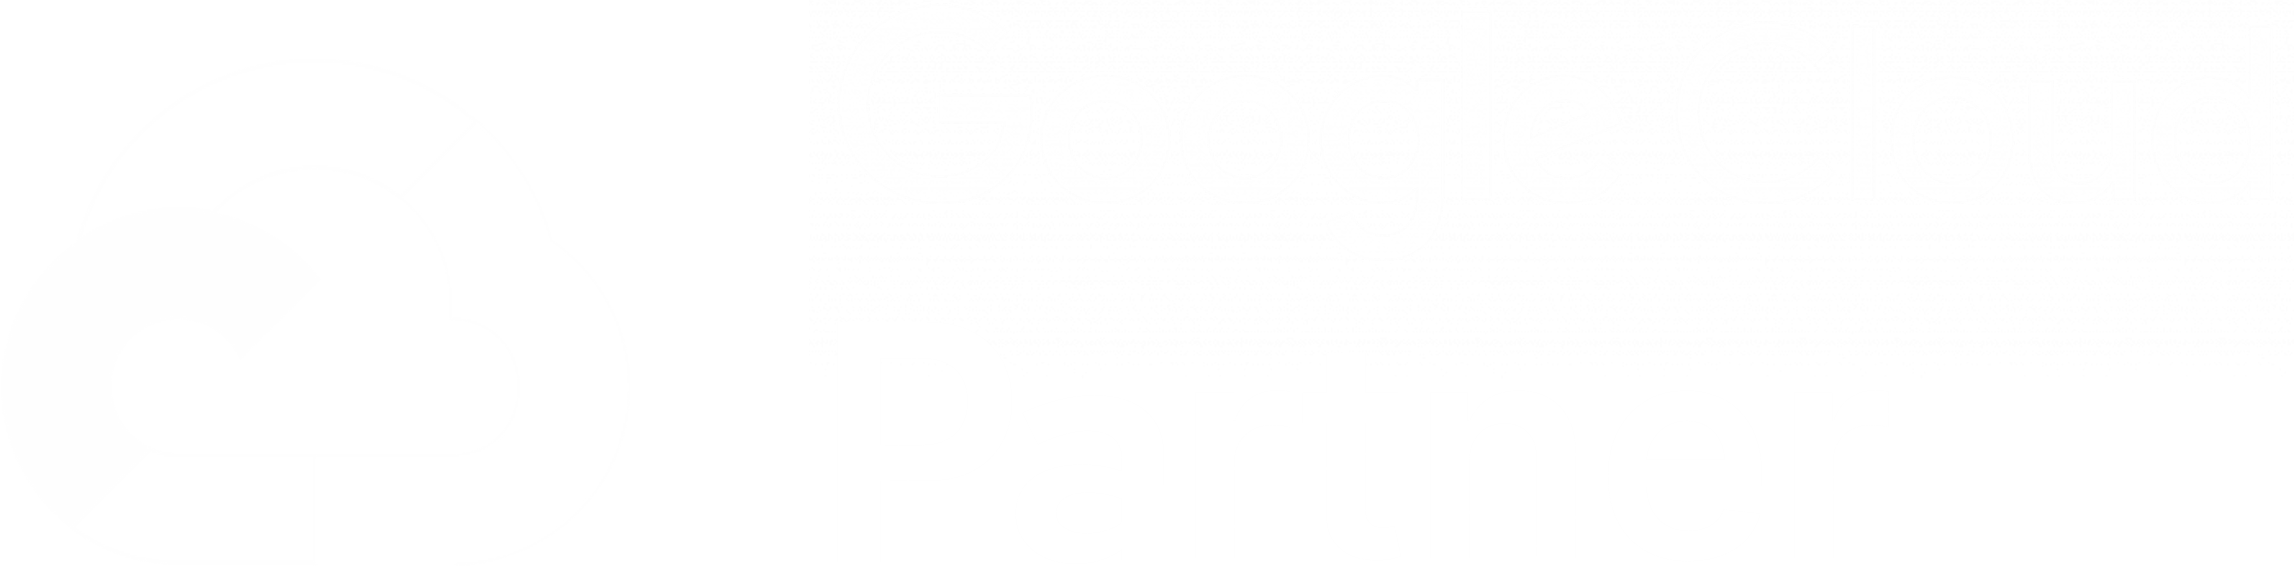 UnifyCloud - Google Cloud Partner